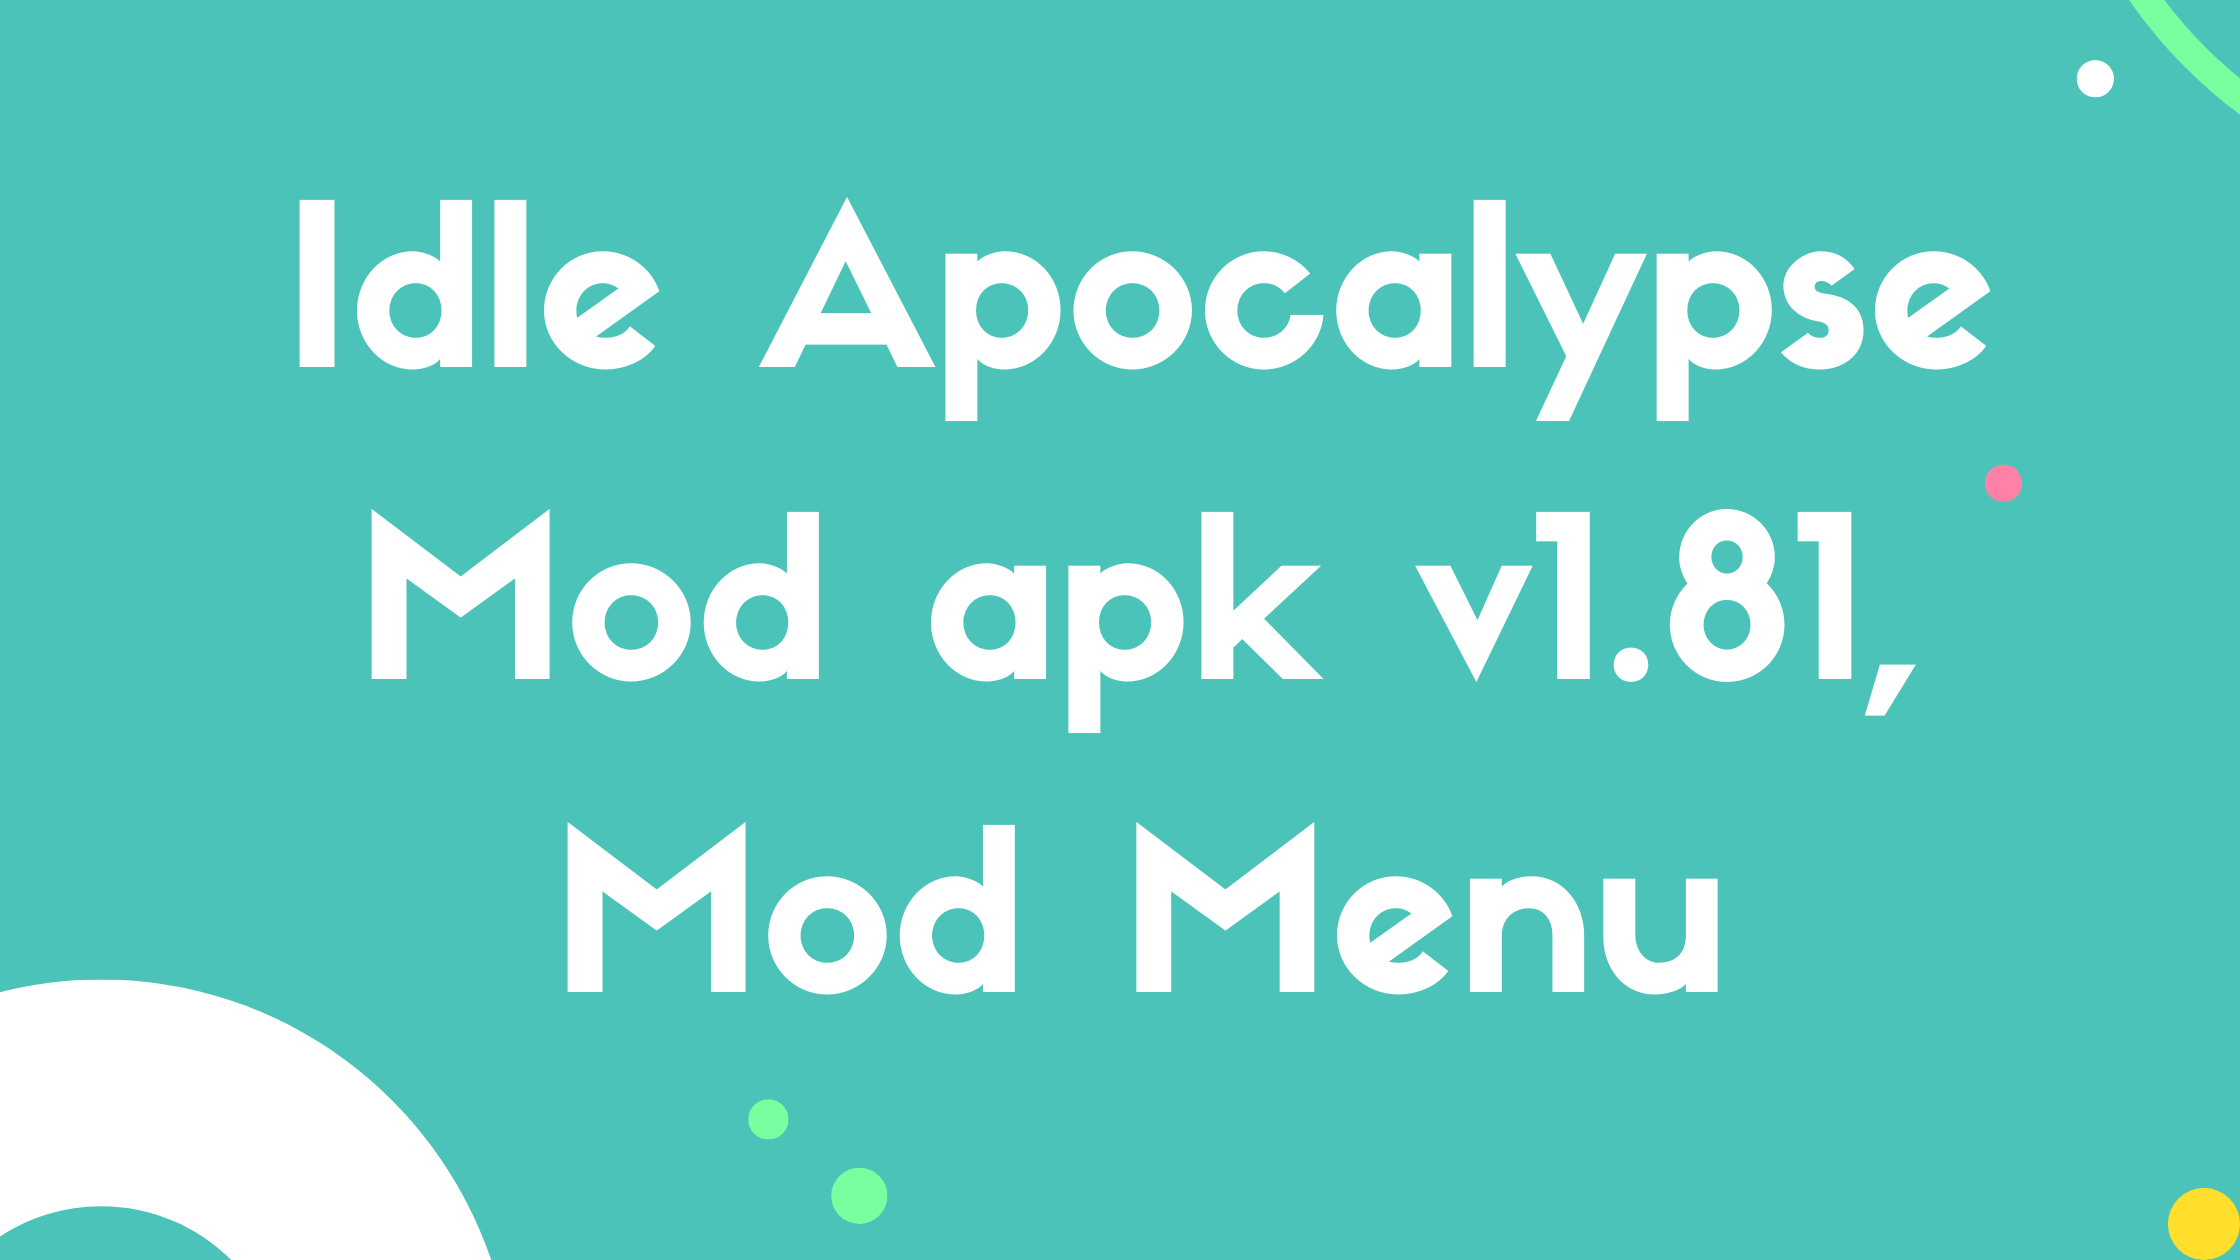 Idle Apocalypse Mod apk v1.81, Mod Menu